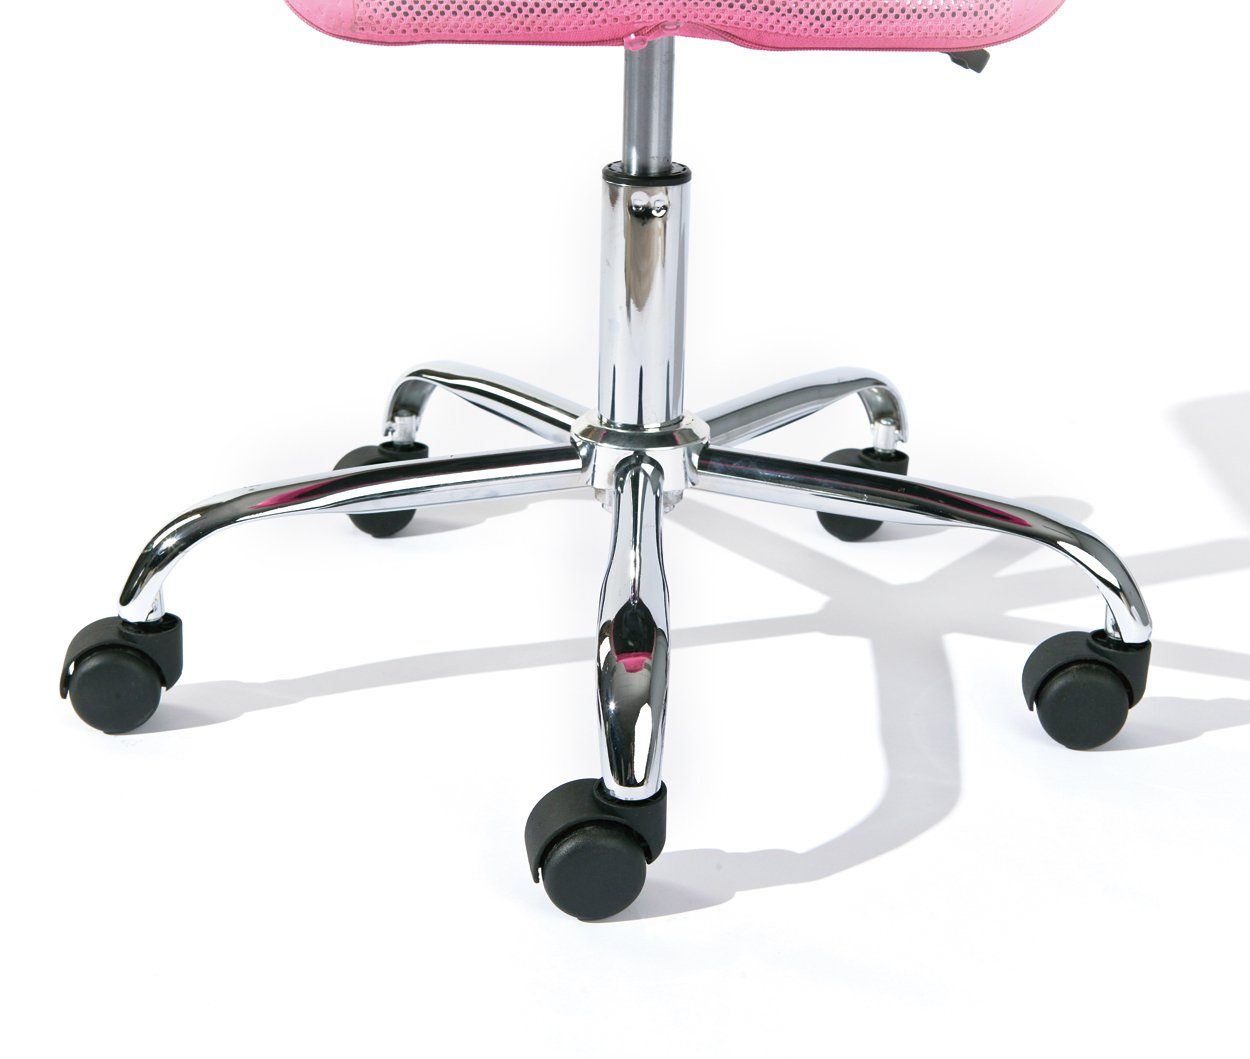 Bonan Gaming-Stuhl Pink. St) Kinder Bürostuhl ebuy24 (1